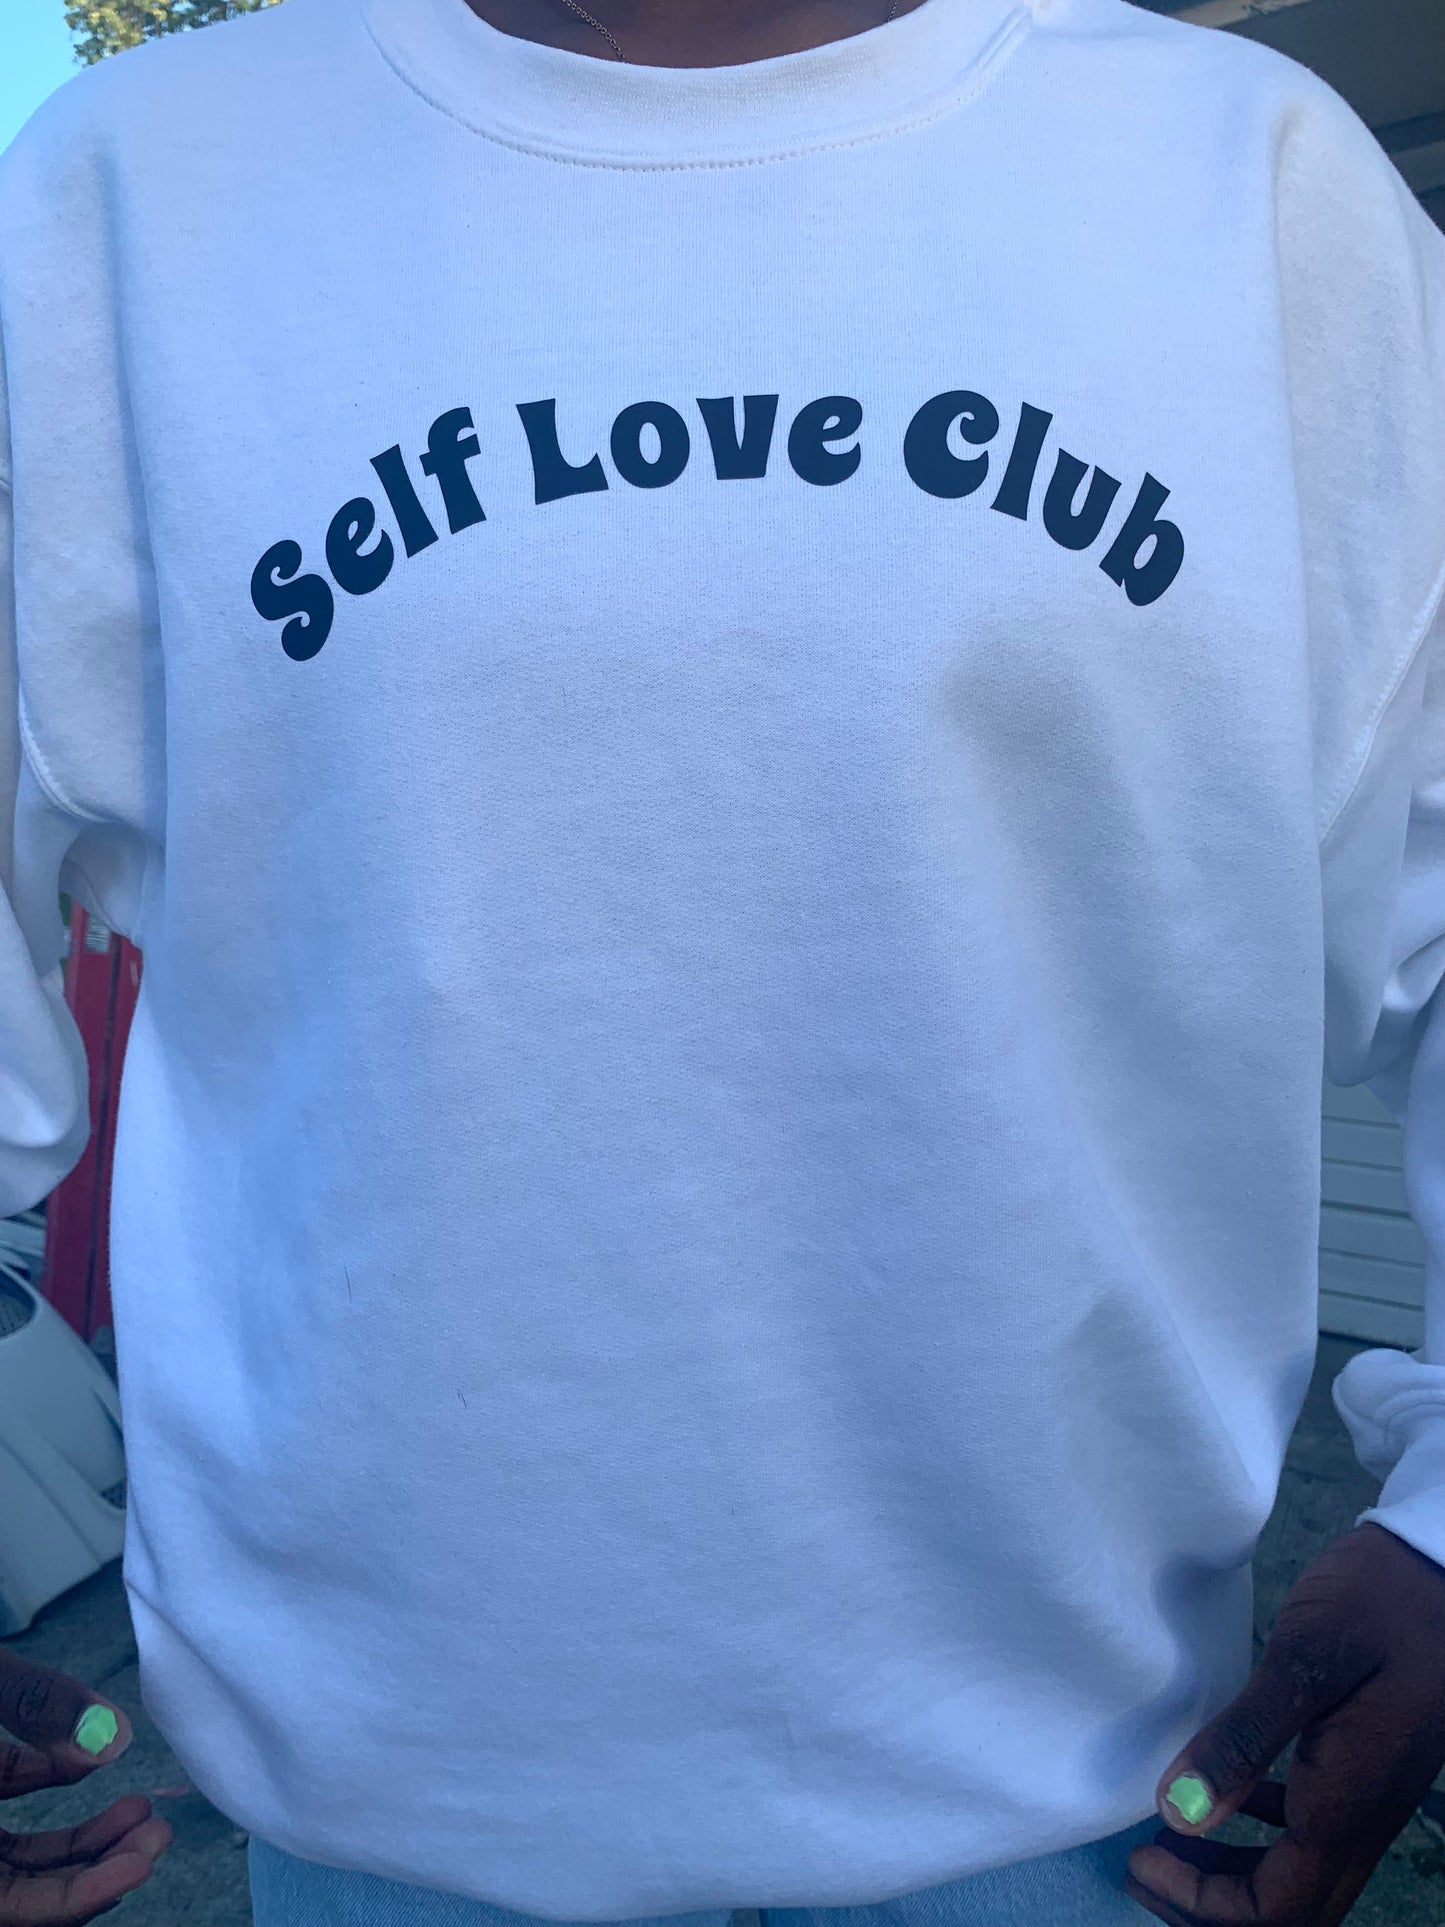 Self Love Club Crewneck